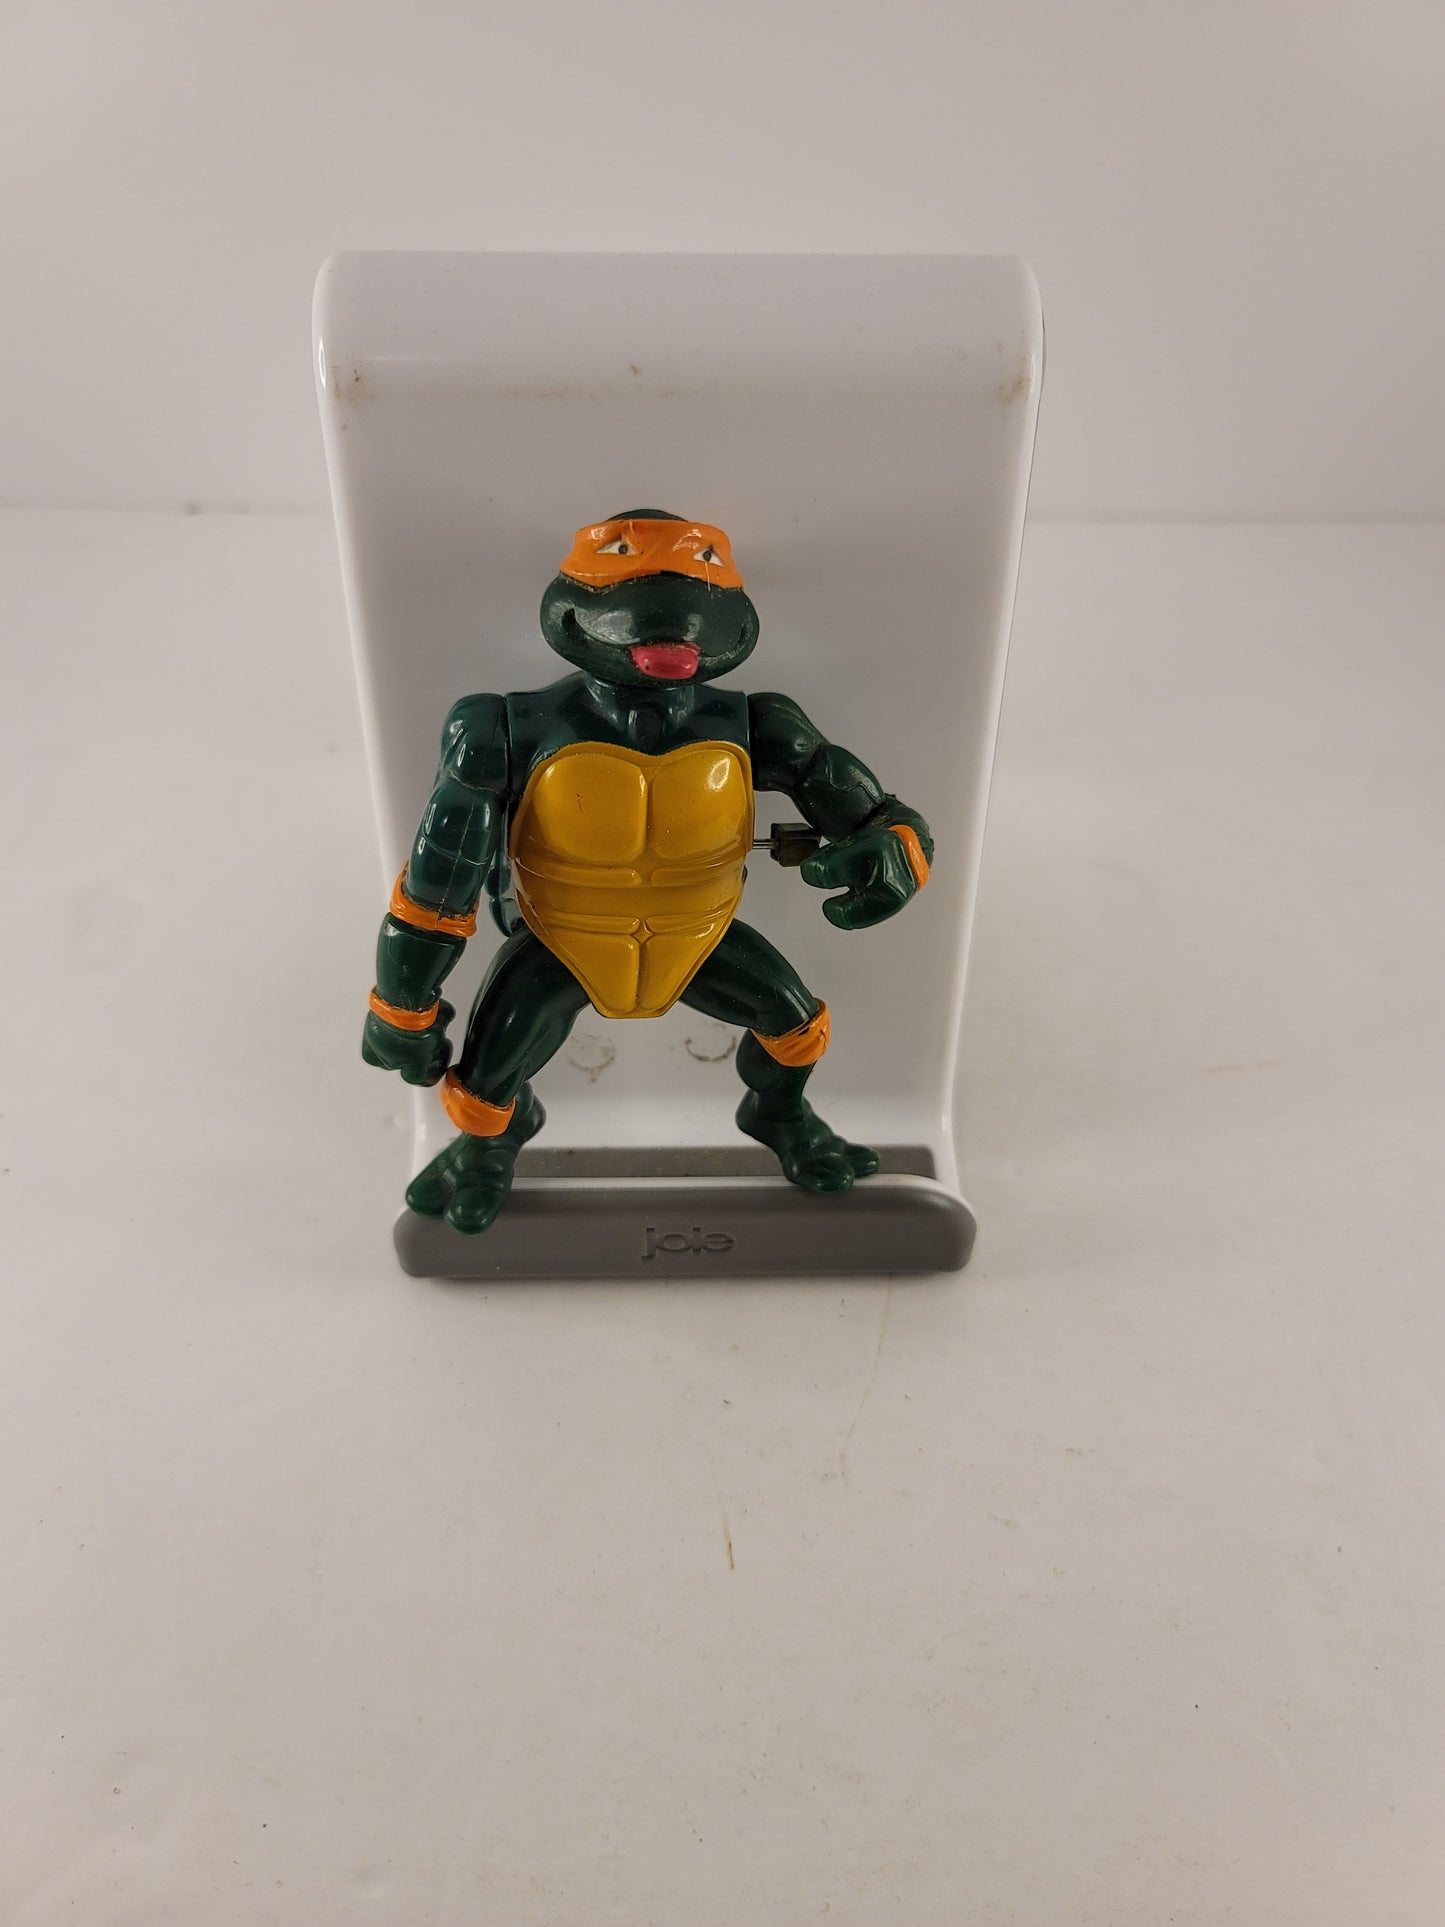 Wacky Action Michelangelo - 1989 Teenage Mutant Ninja Turtles